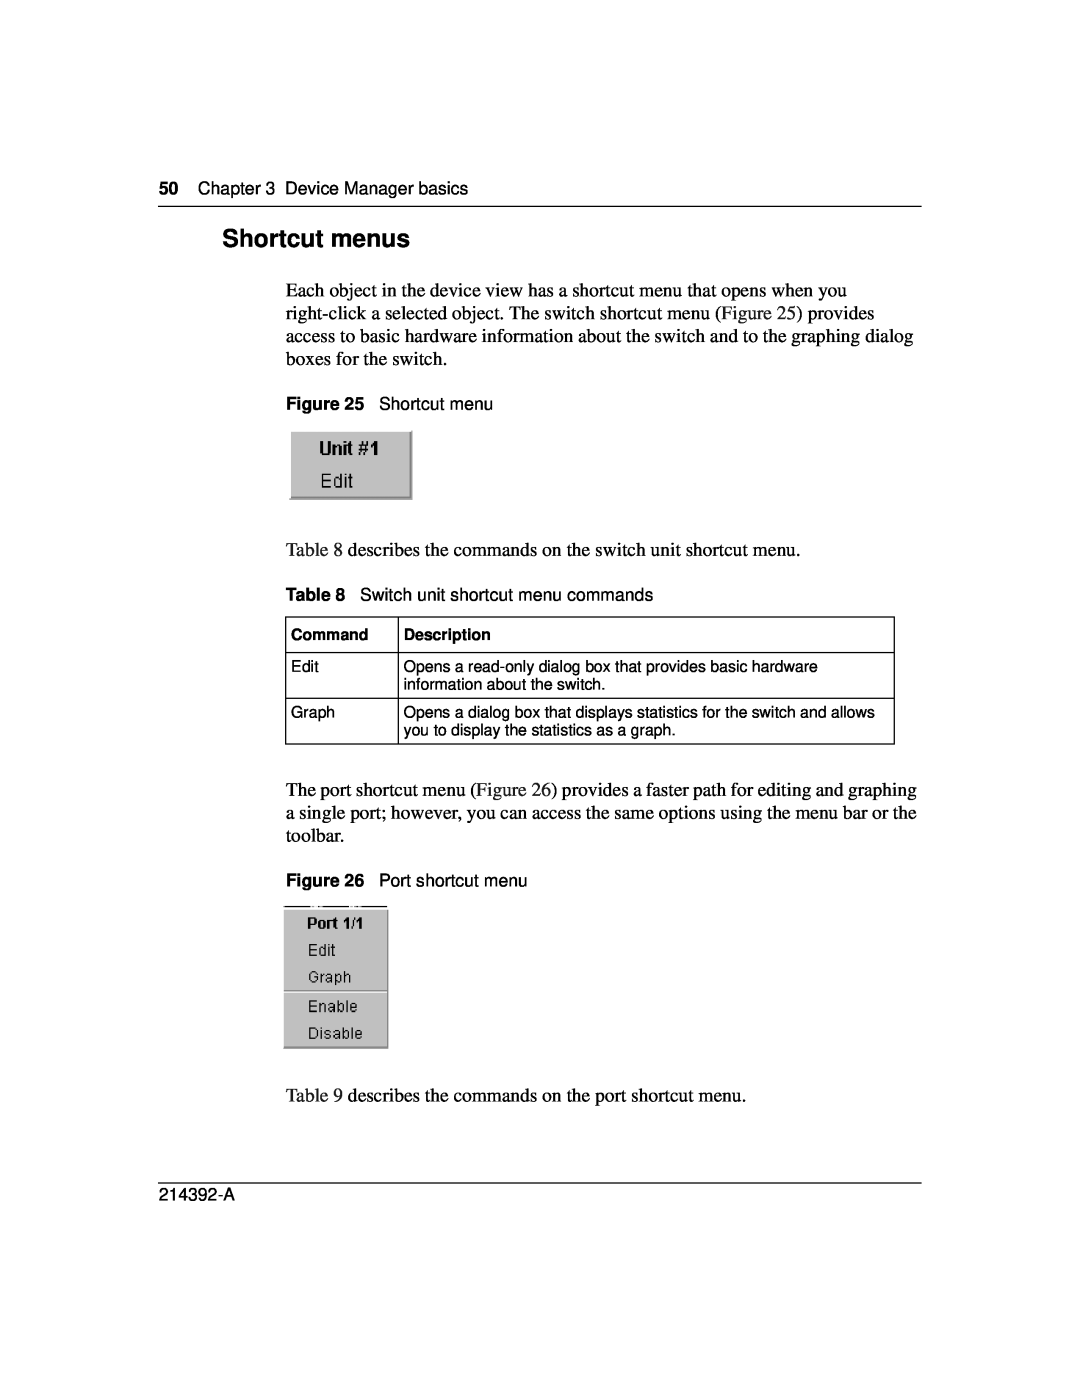 Nortel Networks 380-24F manual Shortcut menus 